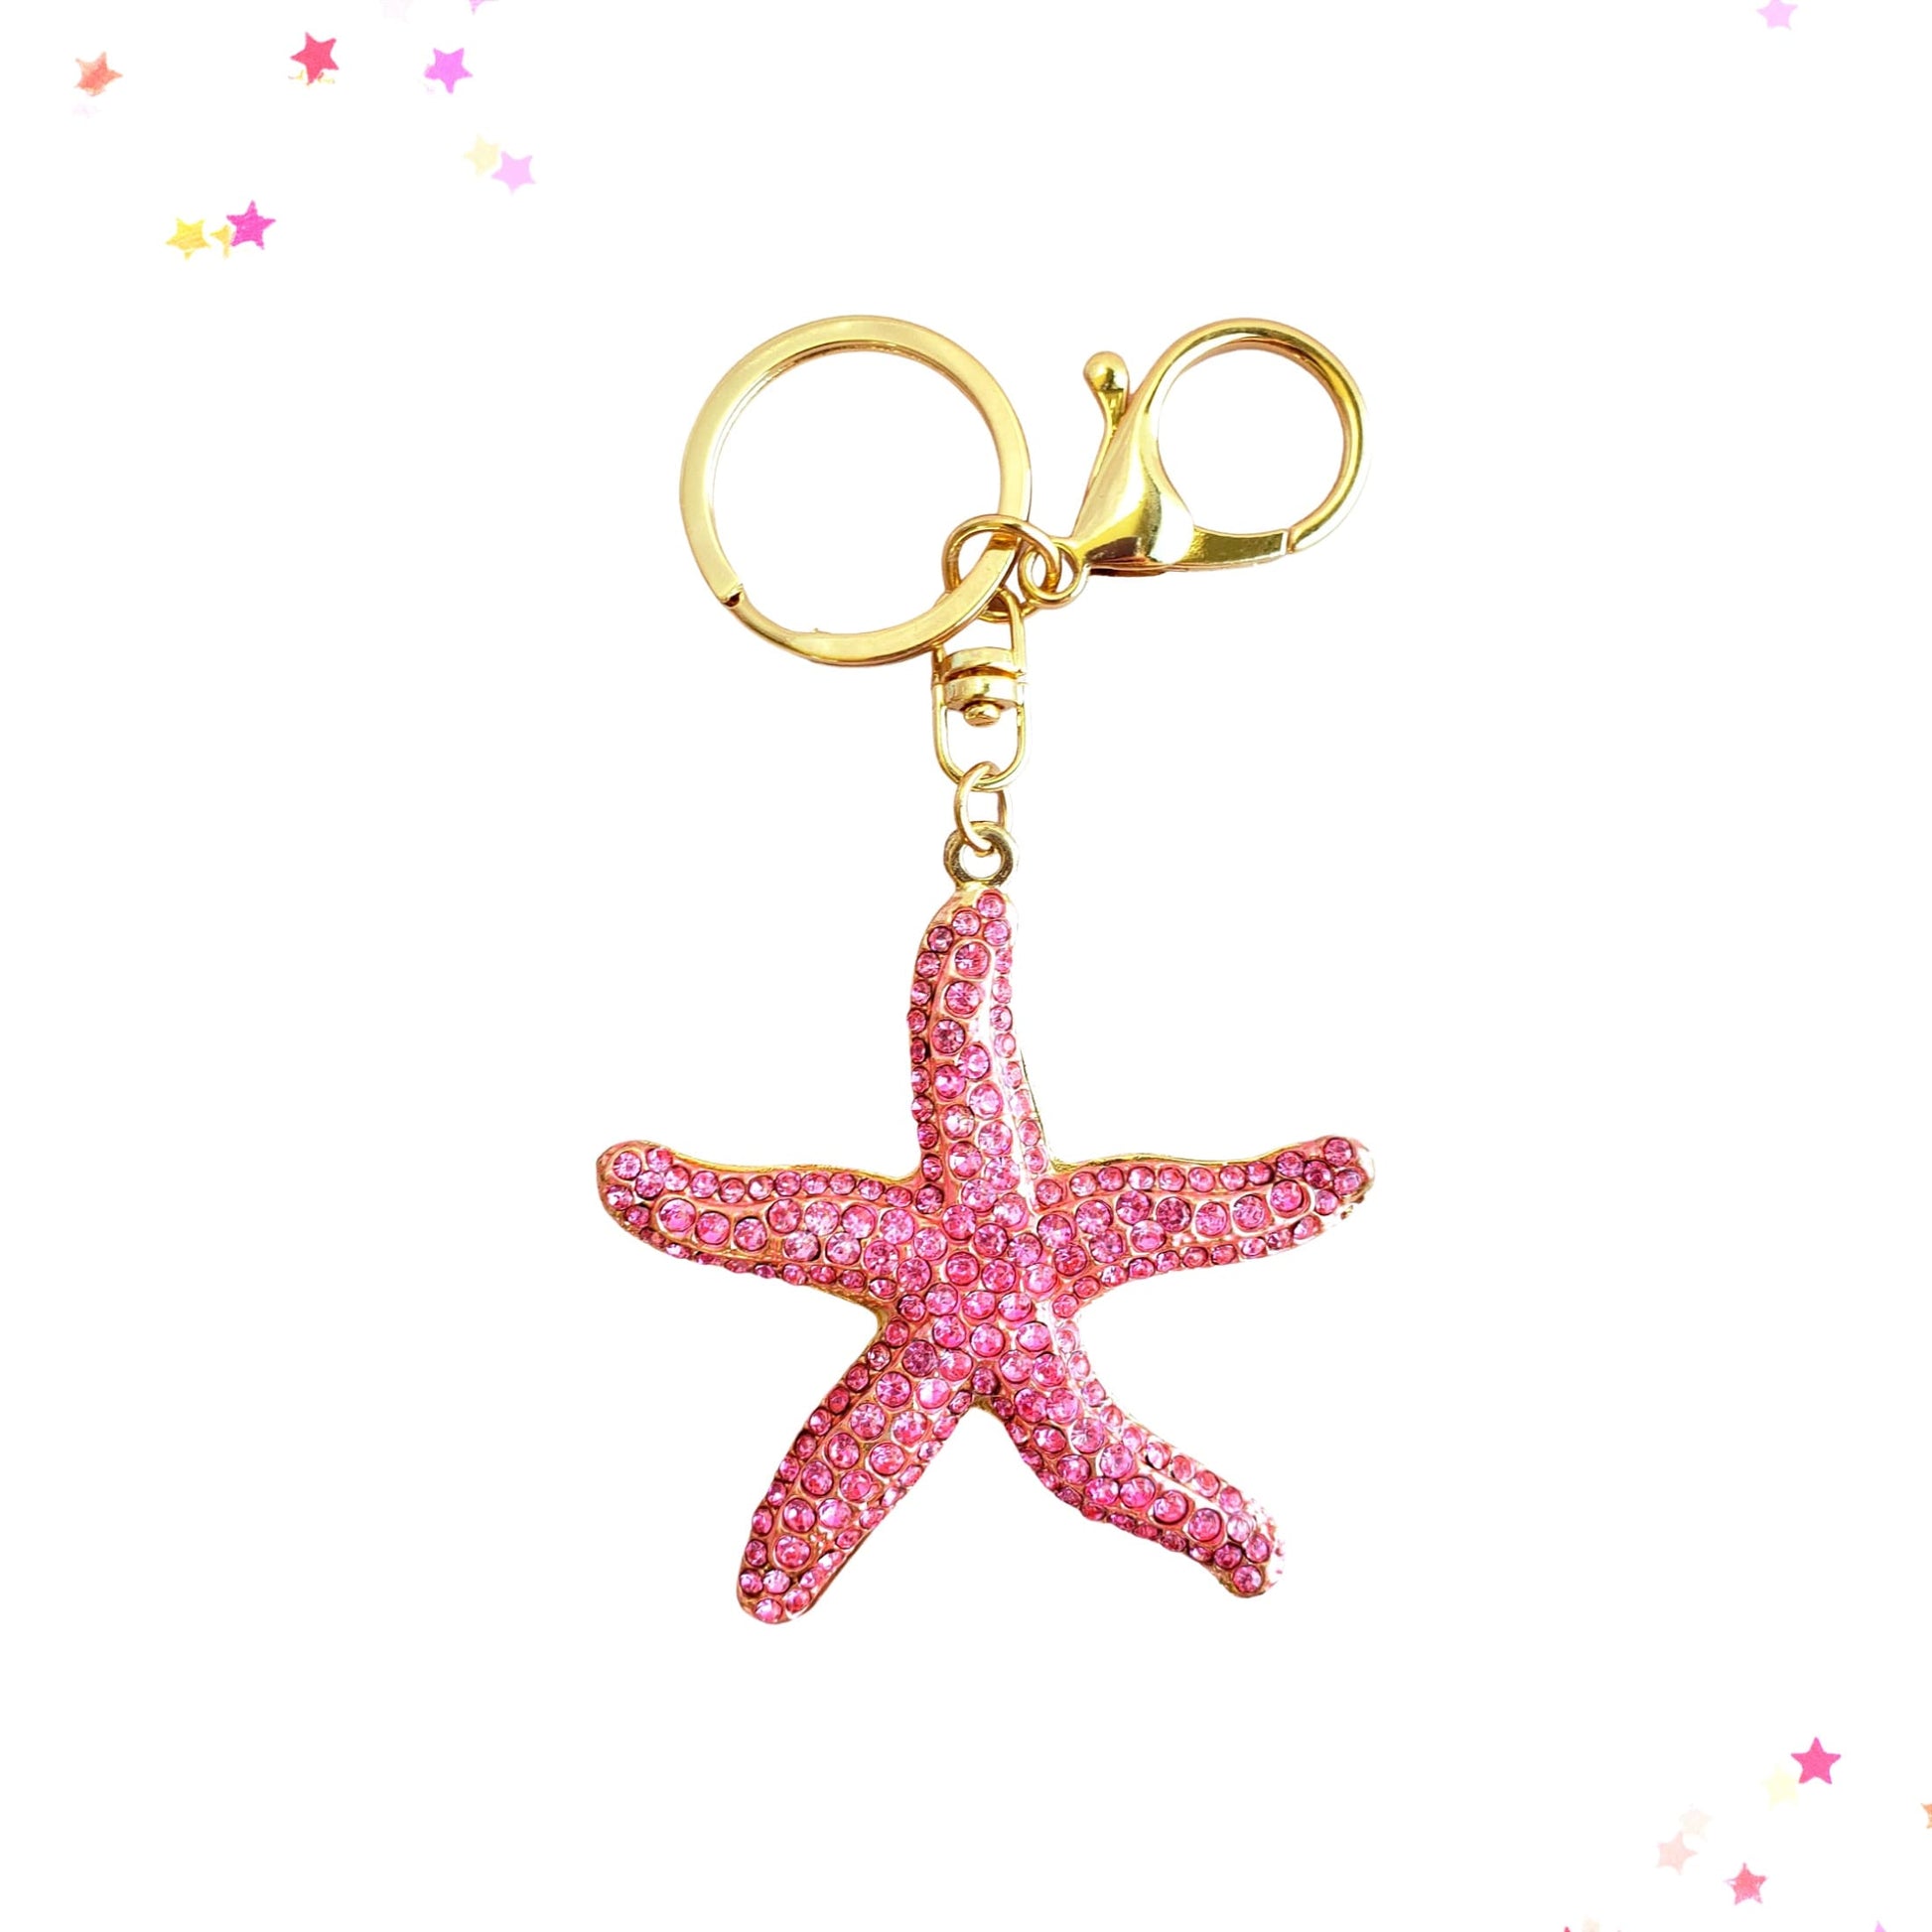 Pink Rhinestone Starfish Bag Charm Keychain from Confetti Kitty, Only 9.99